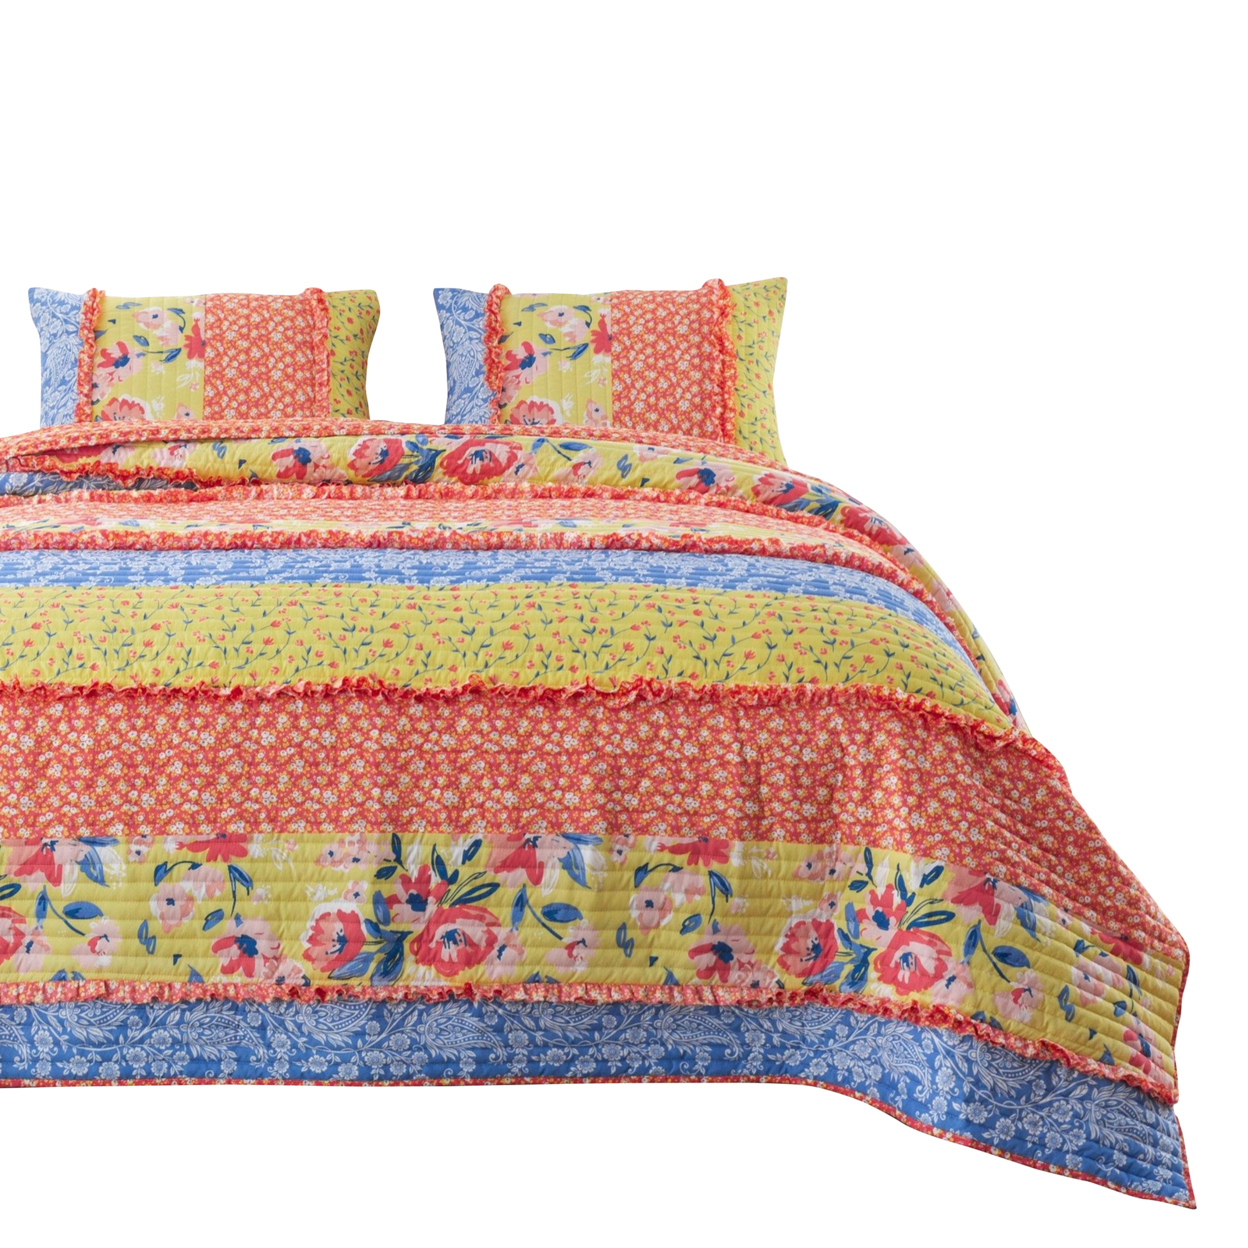 Lio 2 Piece Microfiber Twin Quilt Set, Bohemian Floral Pattern, Multicolor- Saltoro Sherpi